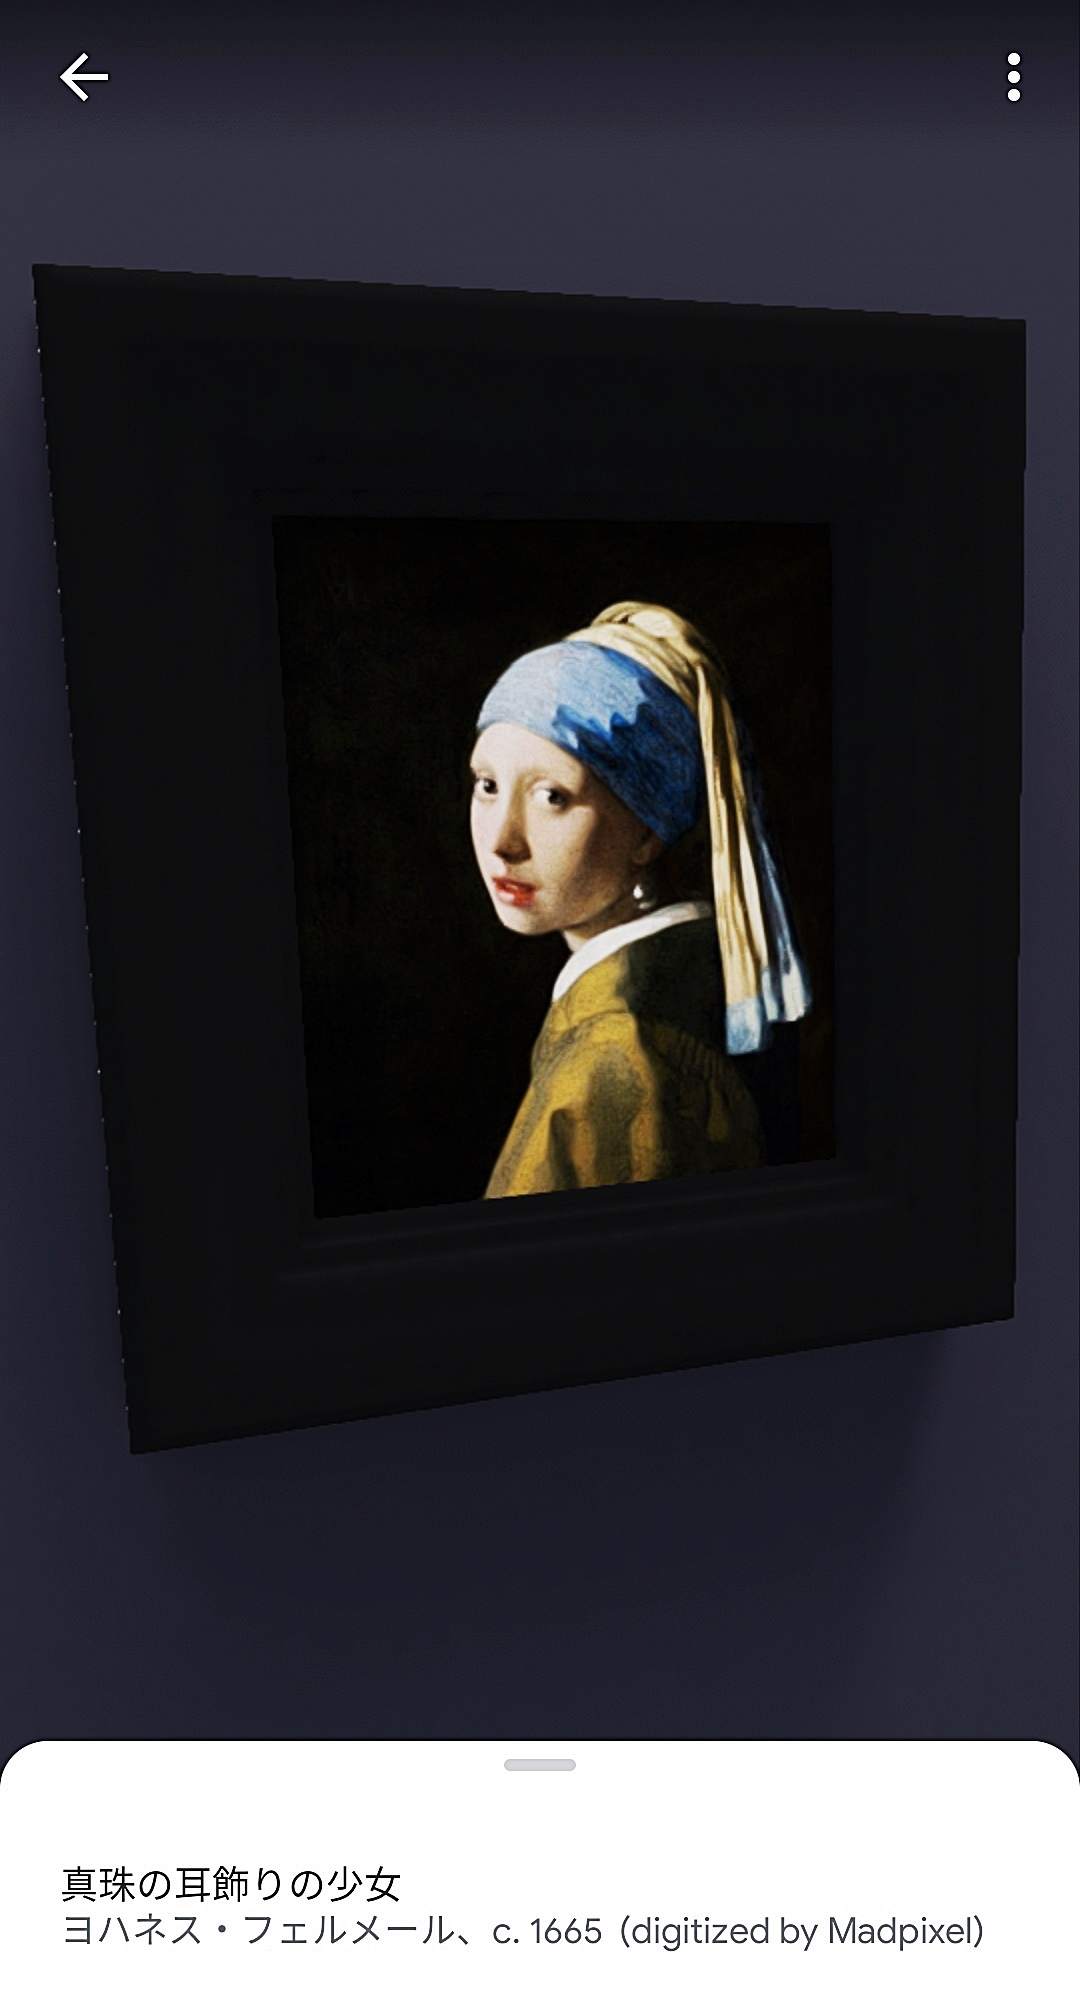 AR技術活用の「Pocket Gallery」機能でアート作品を鑑賞できる「Google Arts & Culture」